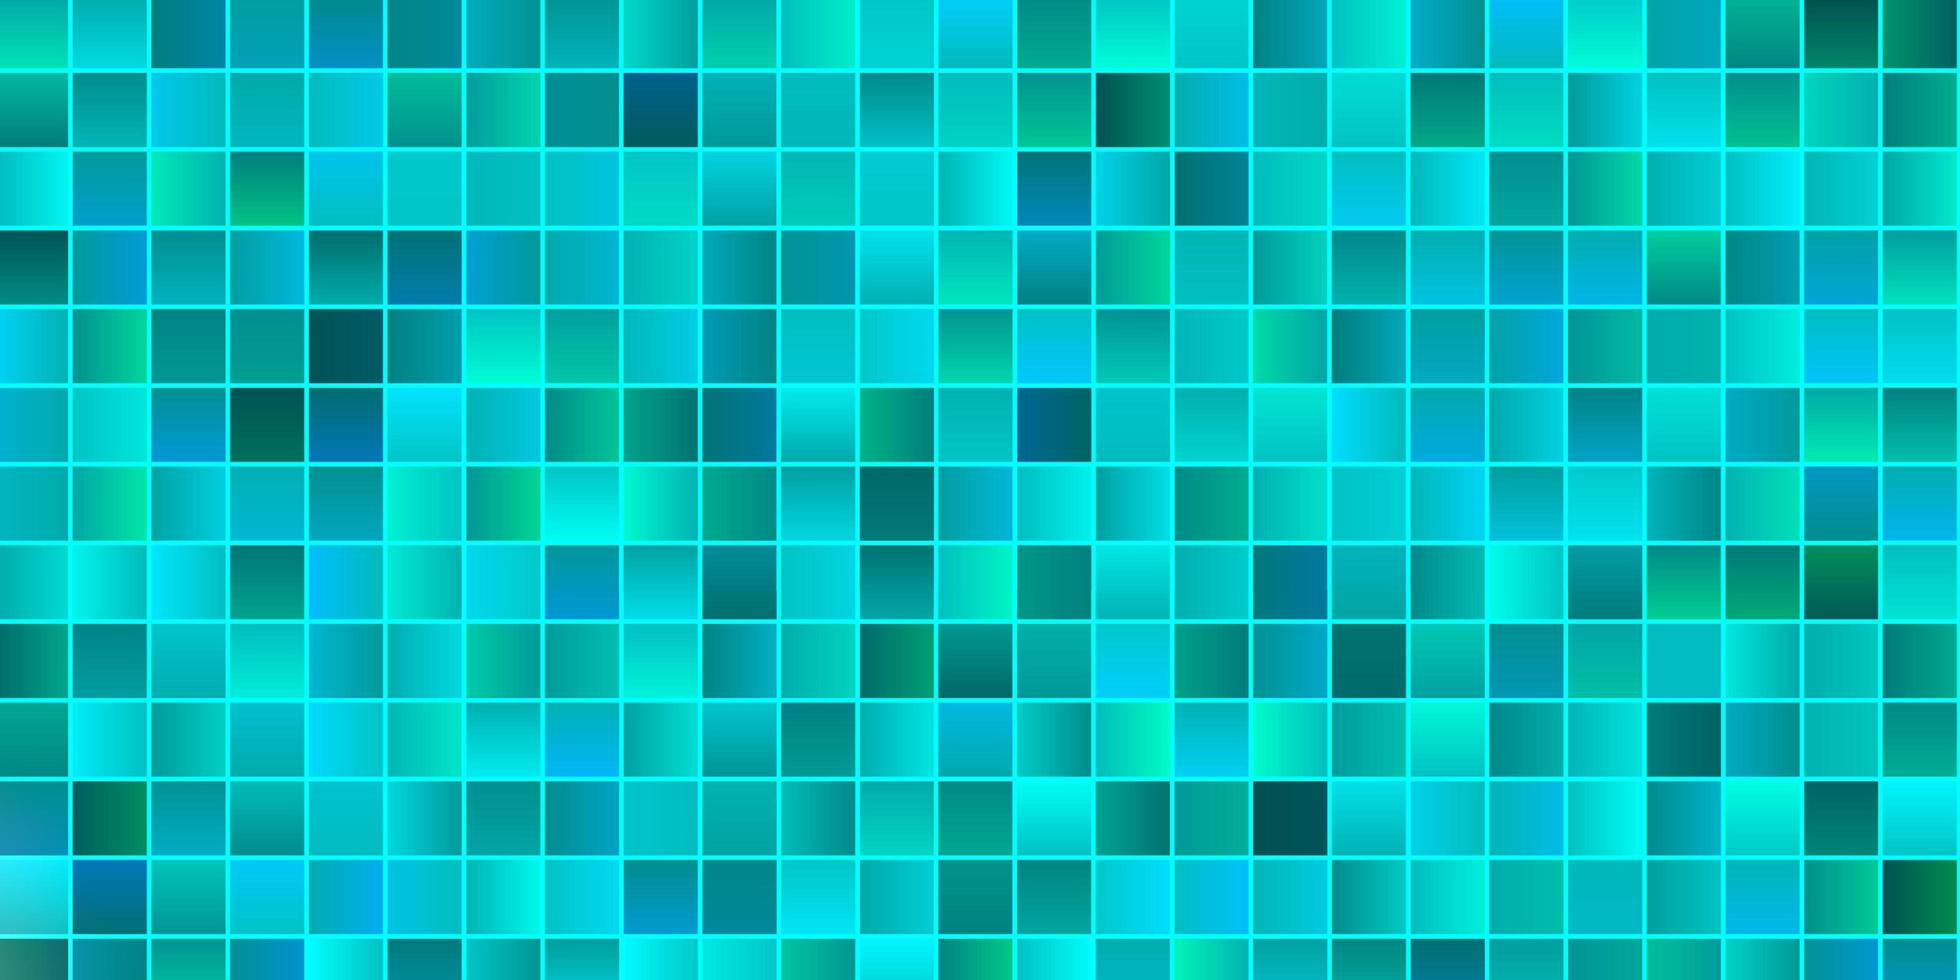 layout vettoriale azzurro, verde con linee, rettangoli.